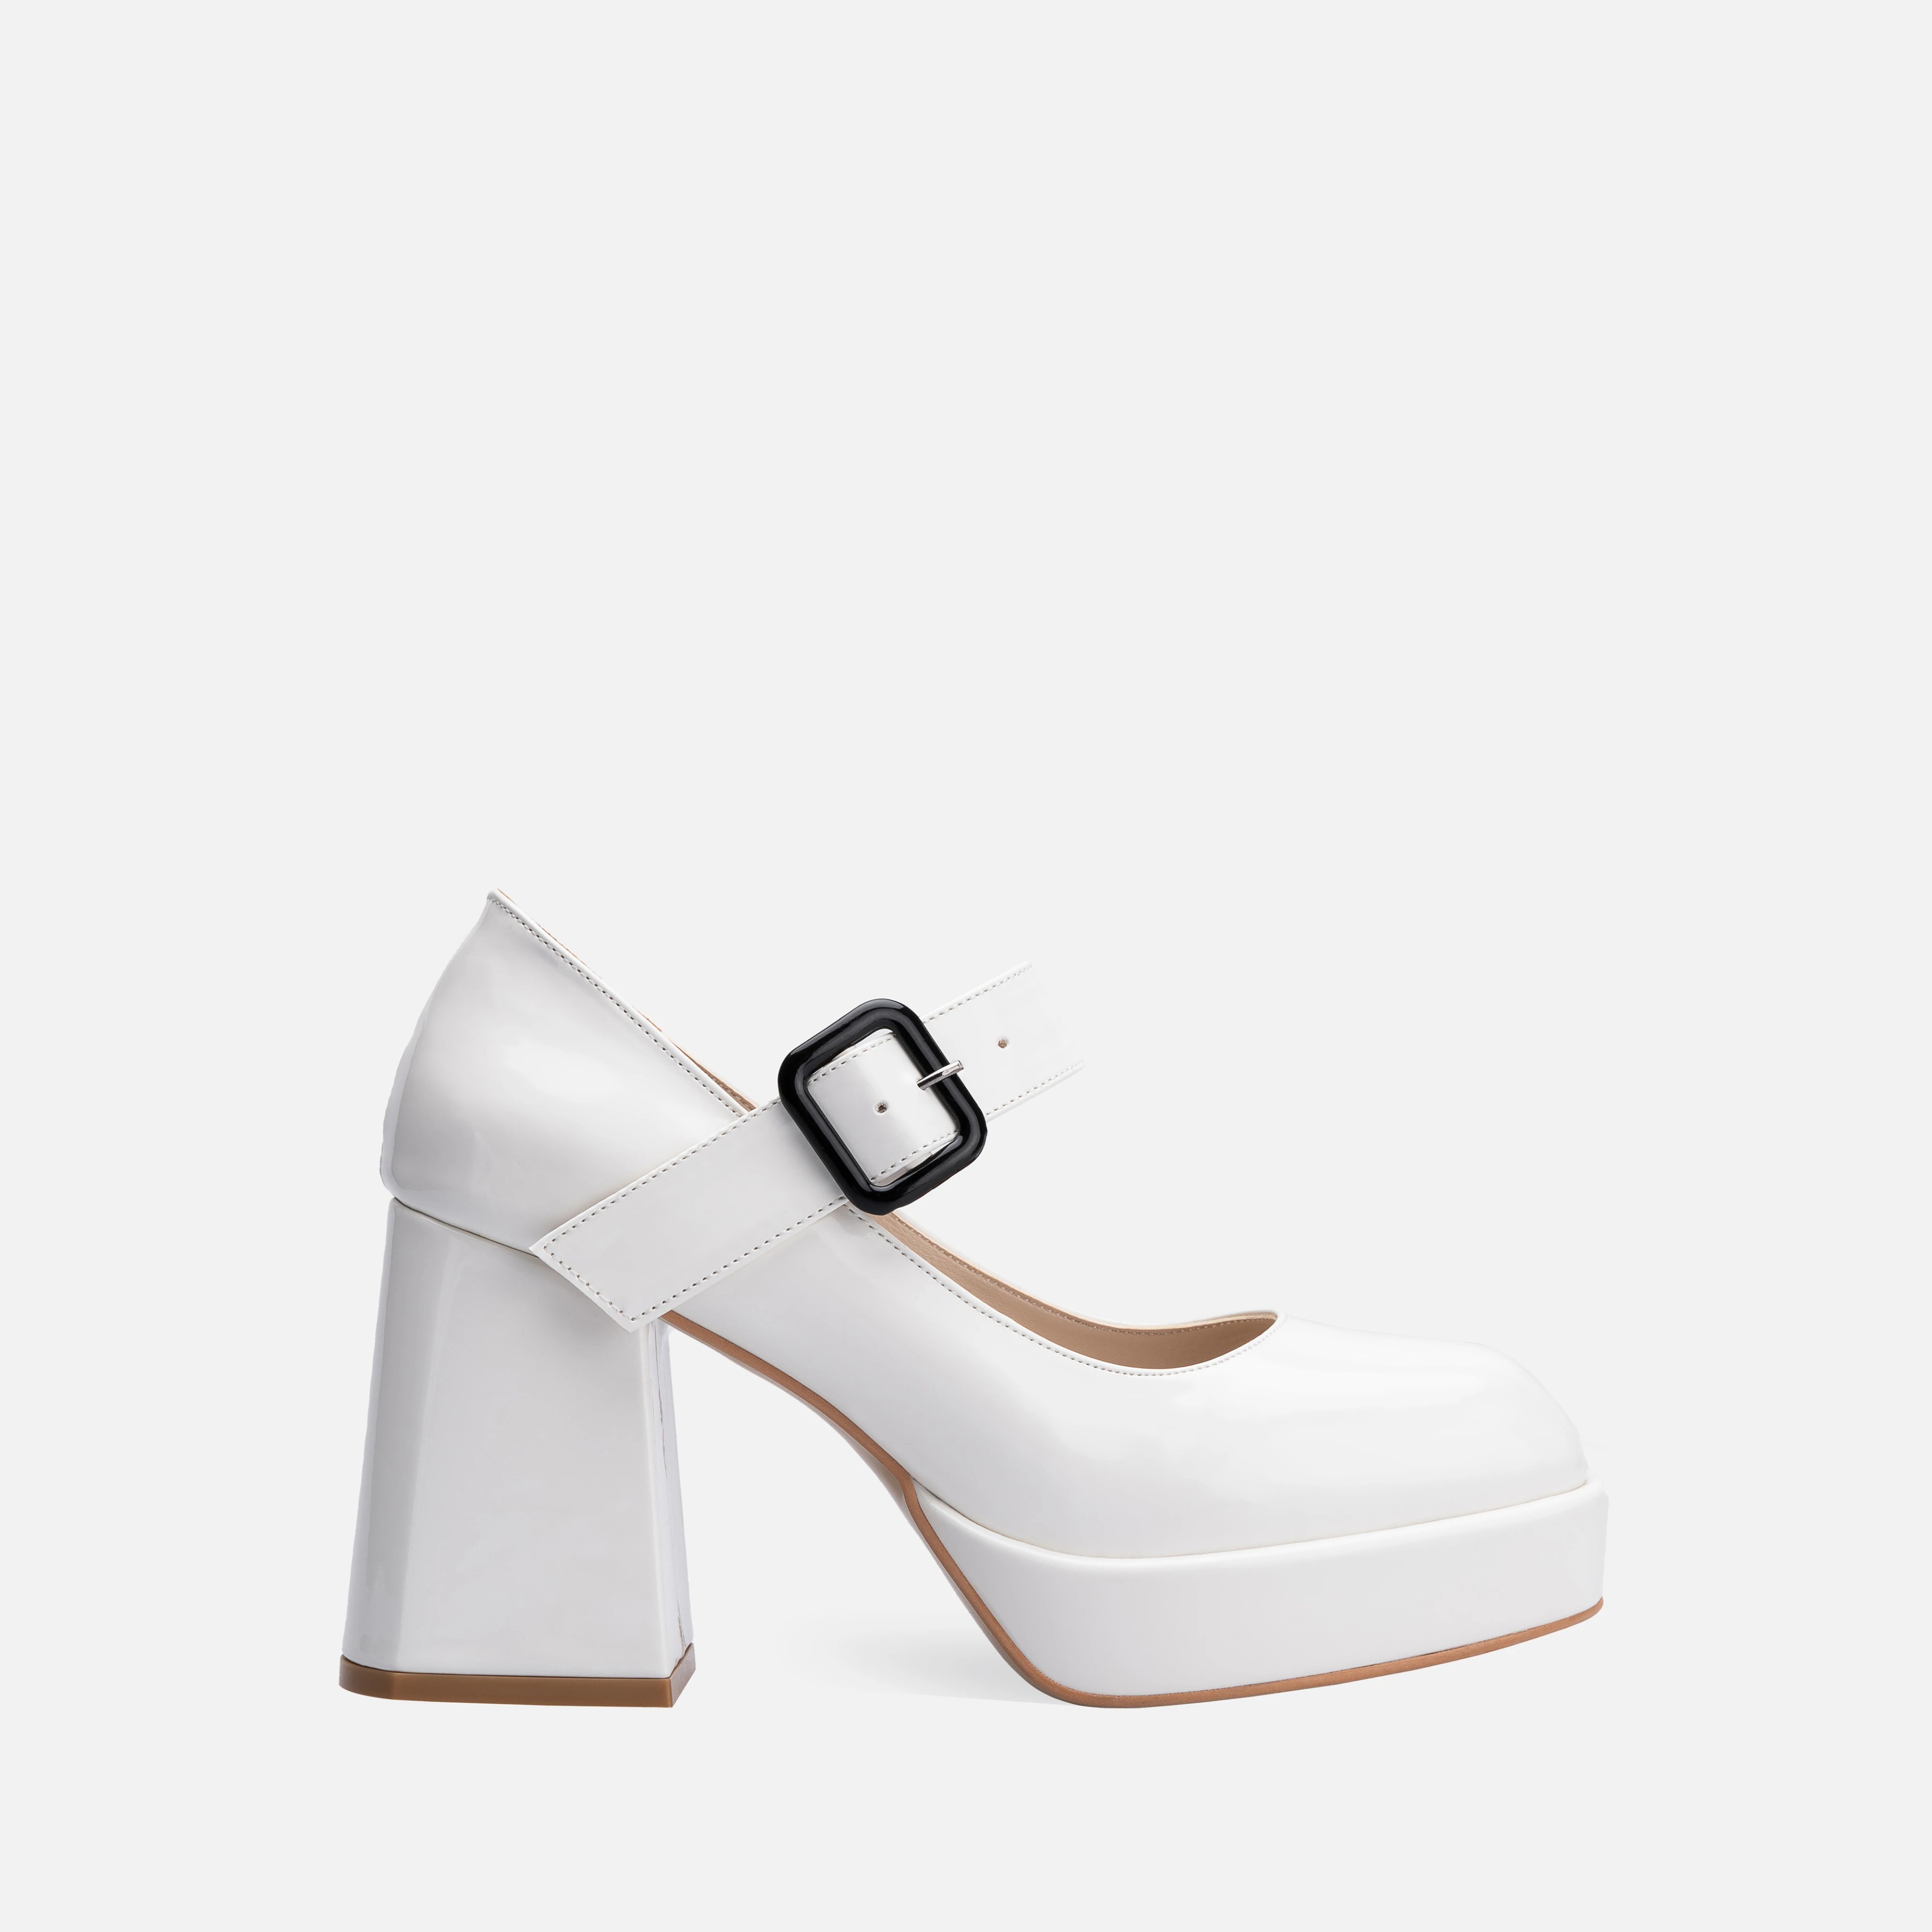 Scarlett Patent Leather Platform Heeled Shoes White